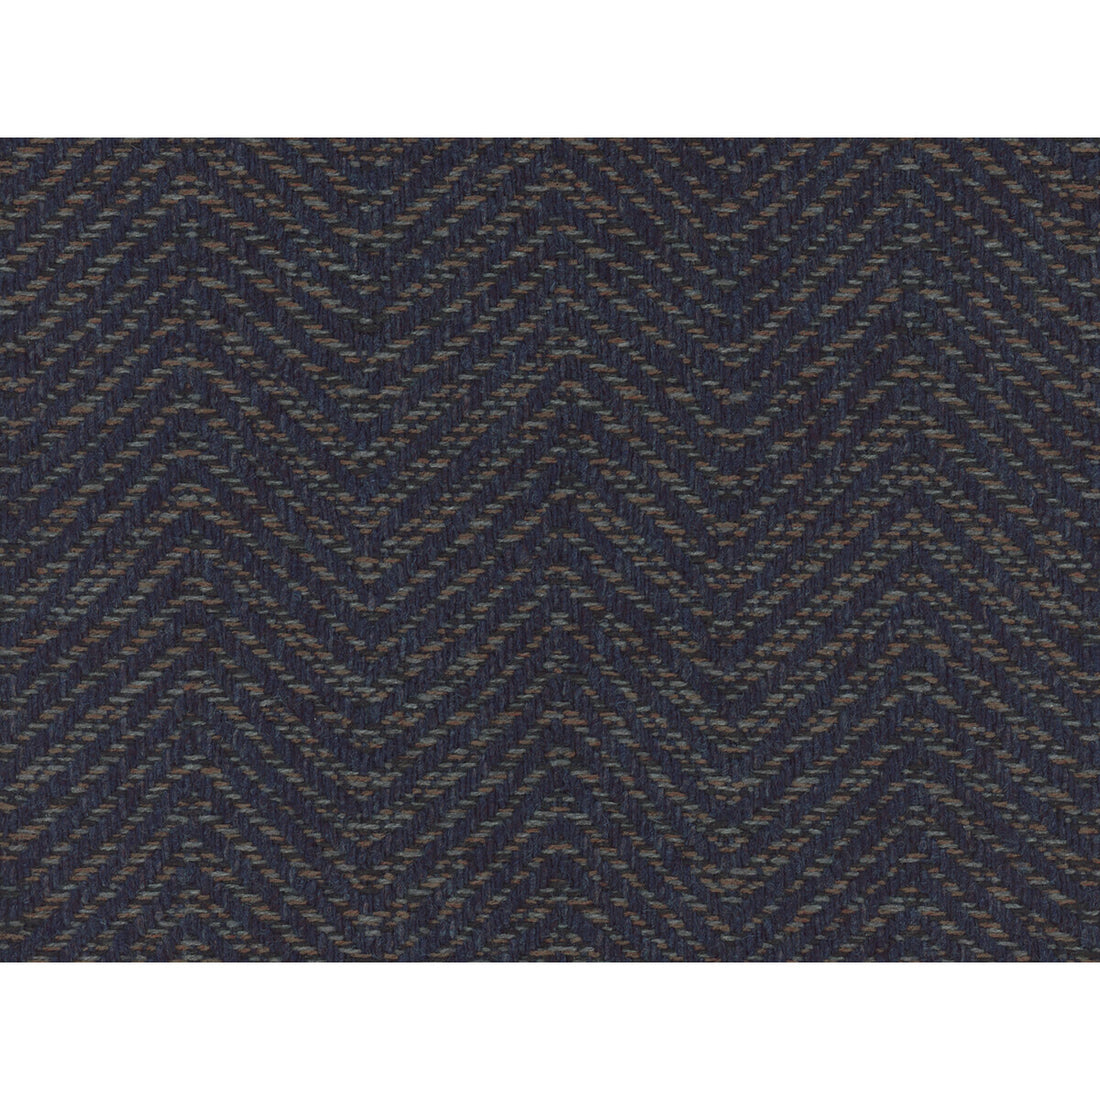 Kravet Smart fabric in 34390-50 color - pattern 34390.50.0 - by Kravet Smart